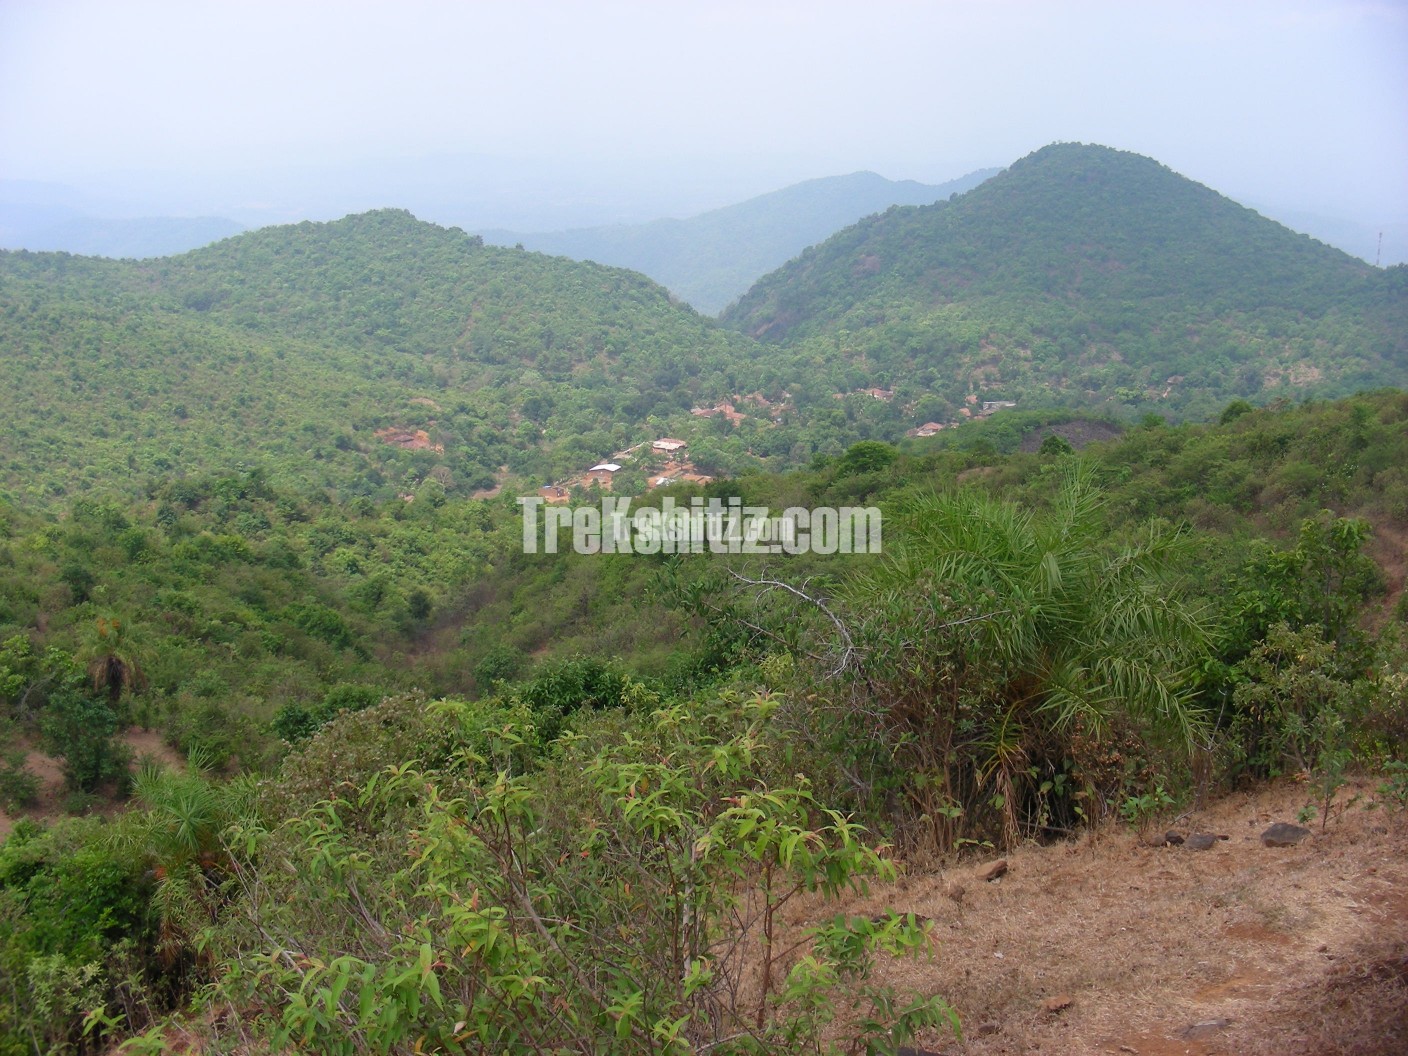 Fukeri village from Hanumantgad